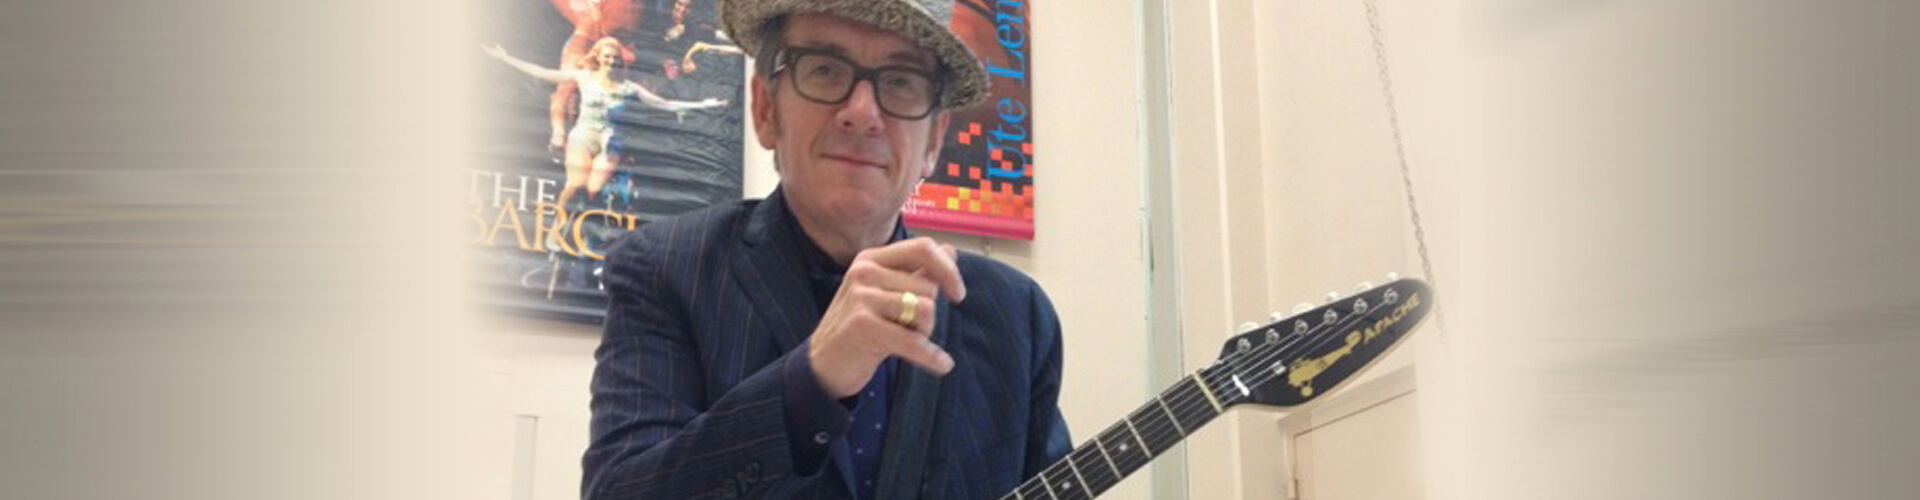 artist, Elvis Costello, holding electric guitar